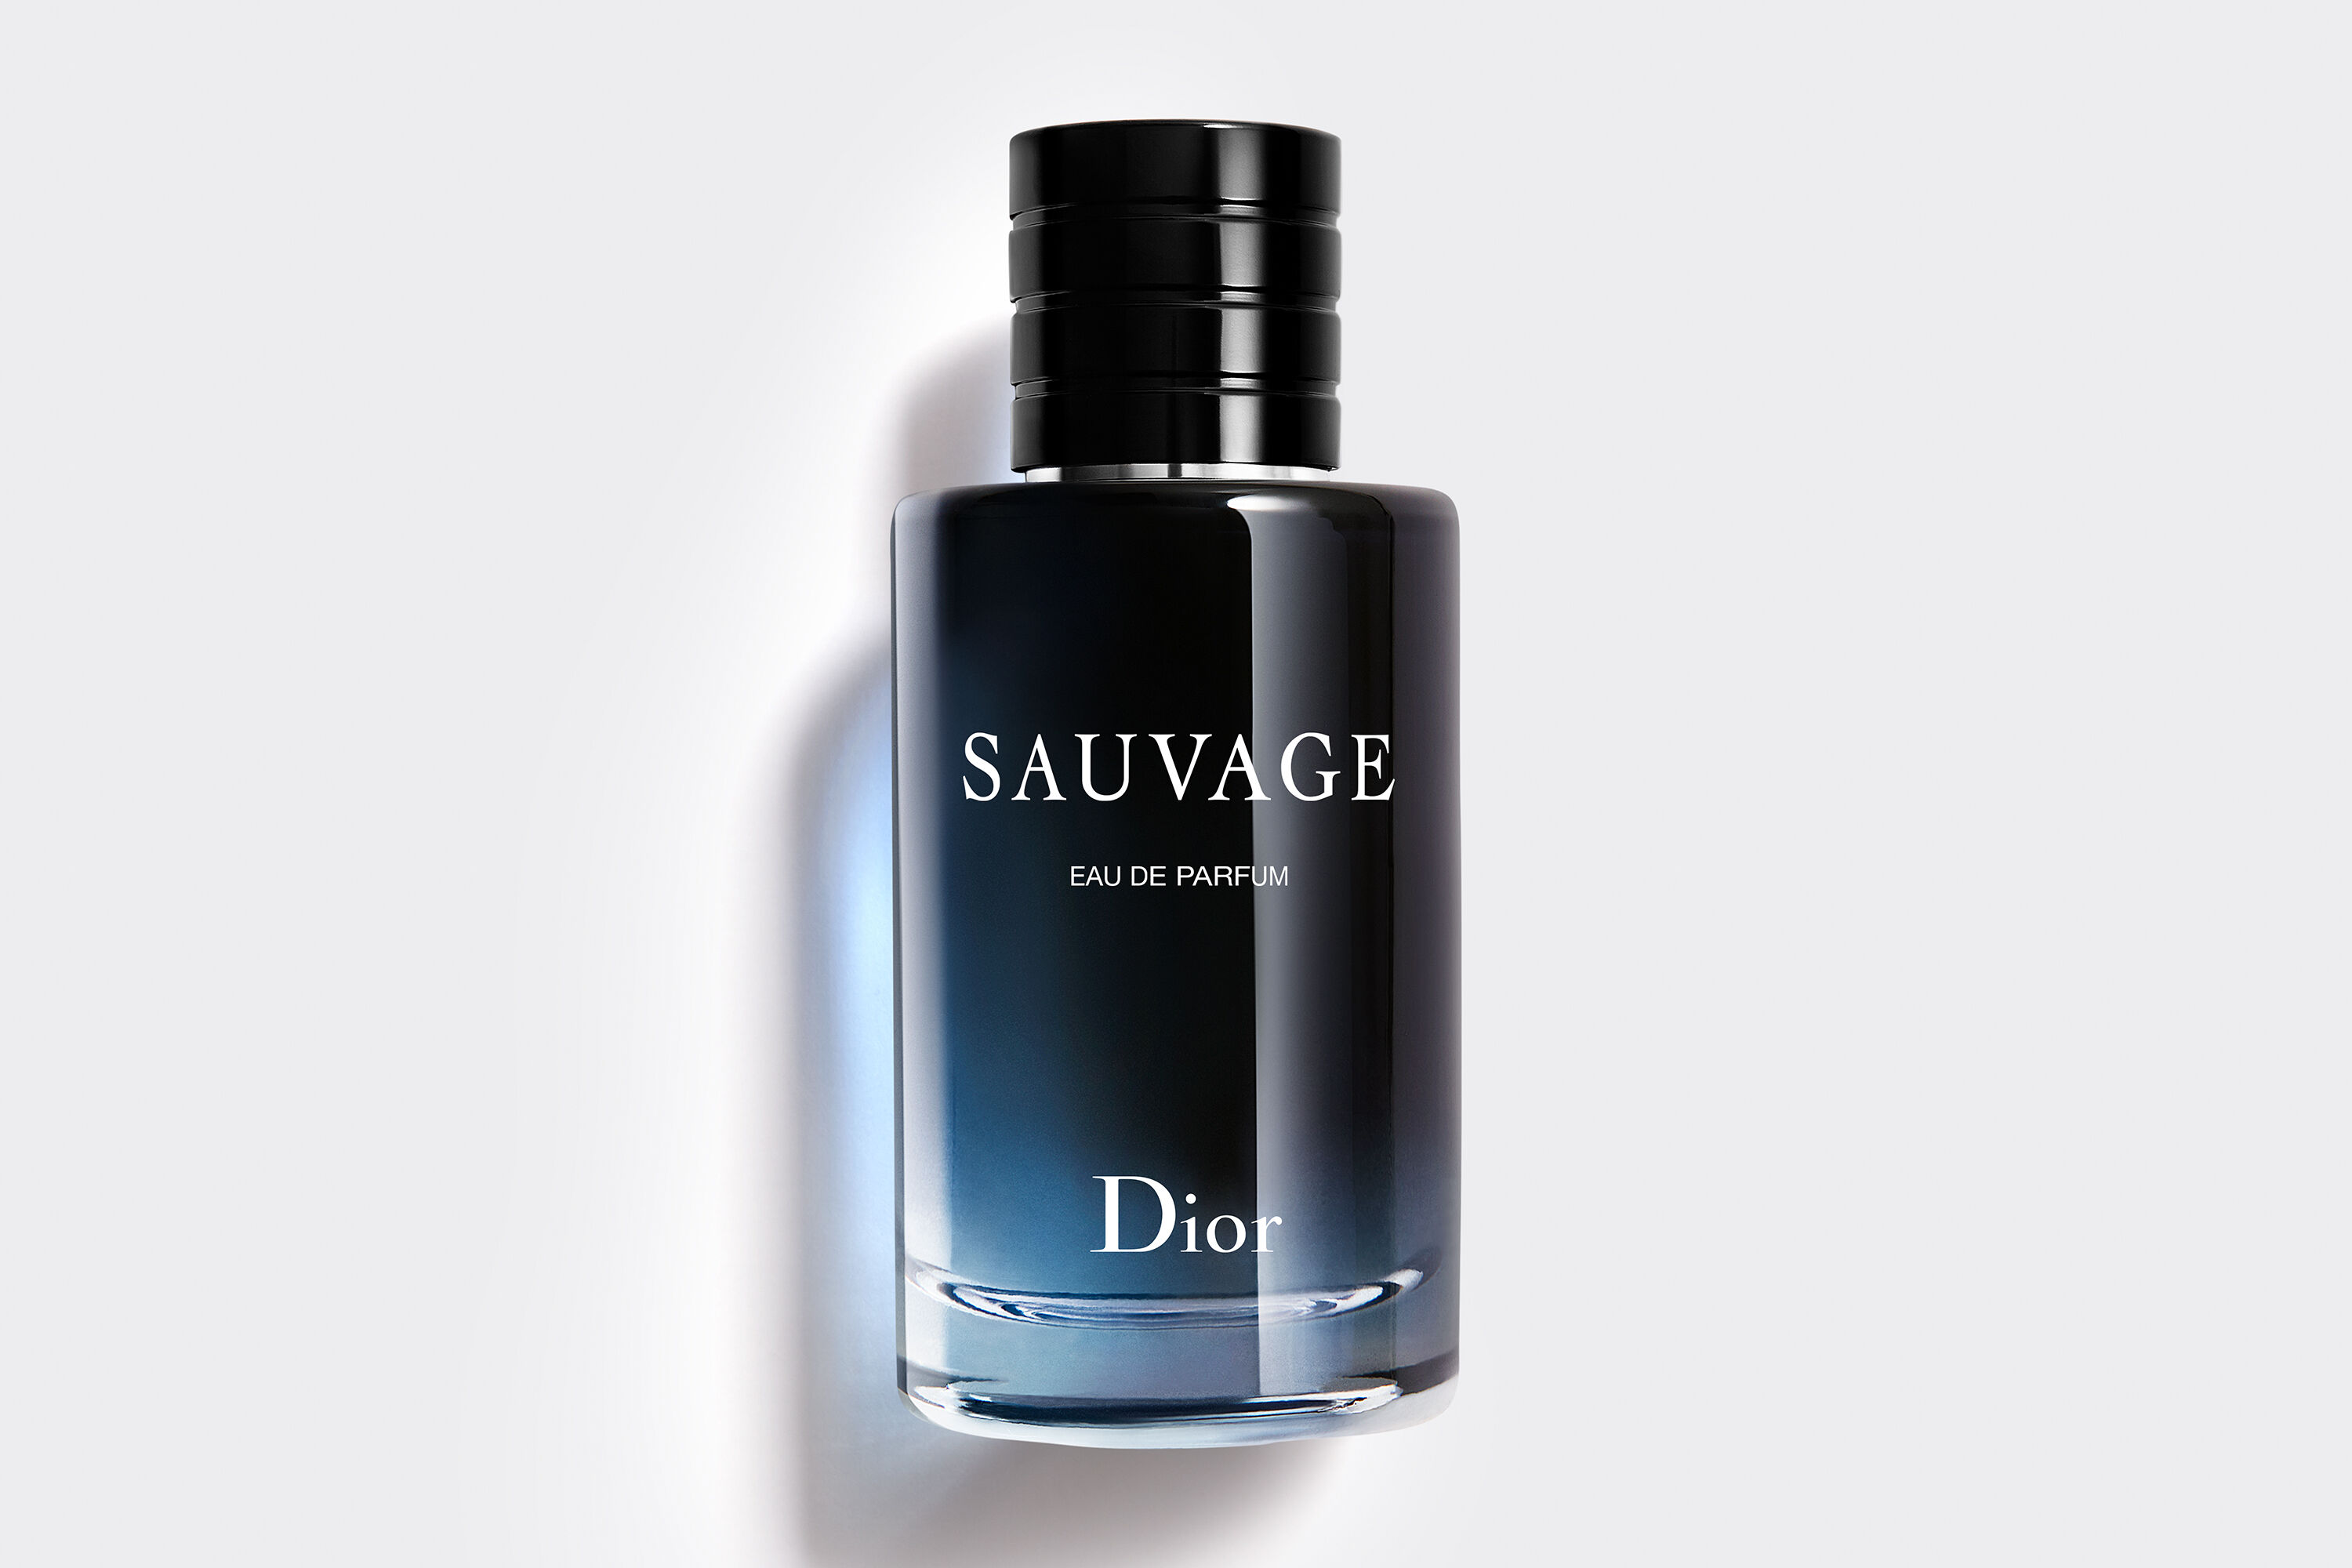 Sauvage de Parfum: perfume cítrico avainillado recargable | DIOR